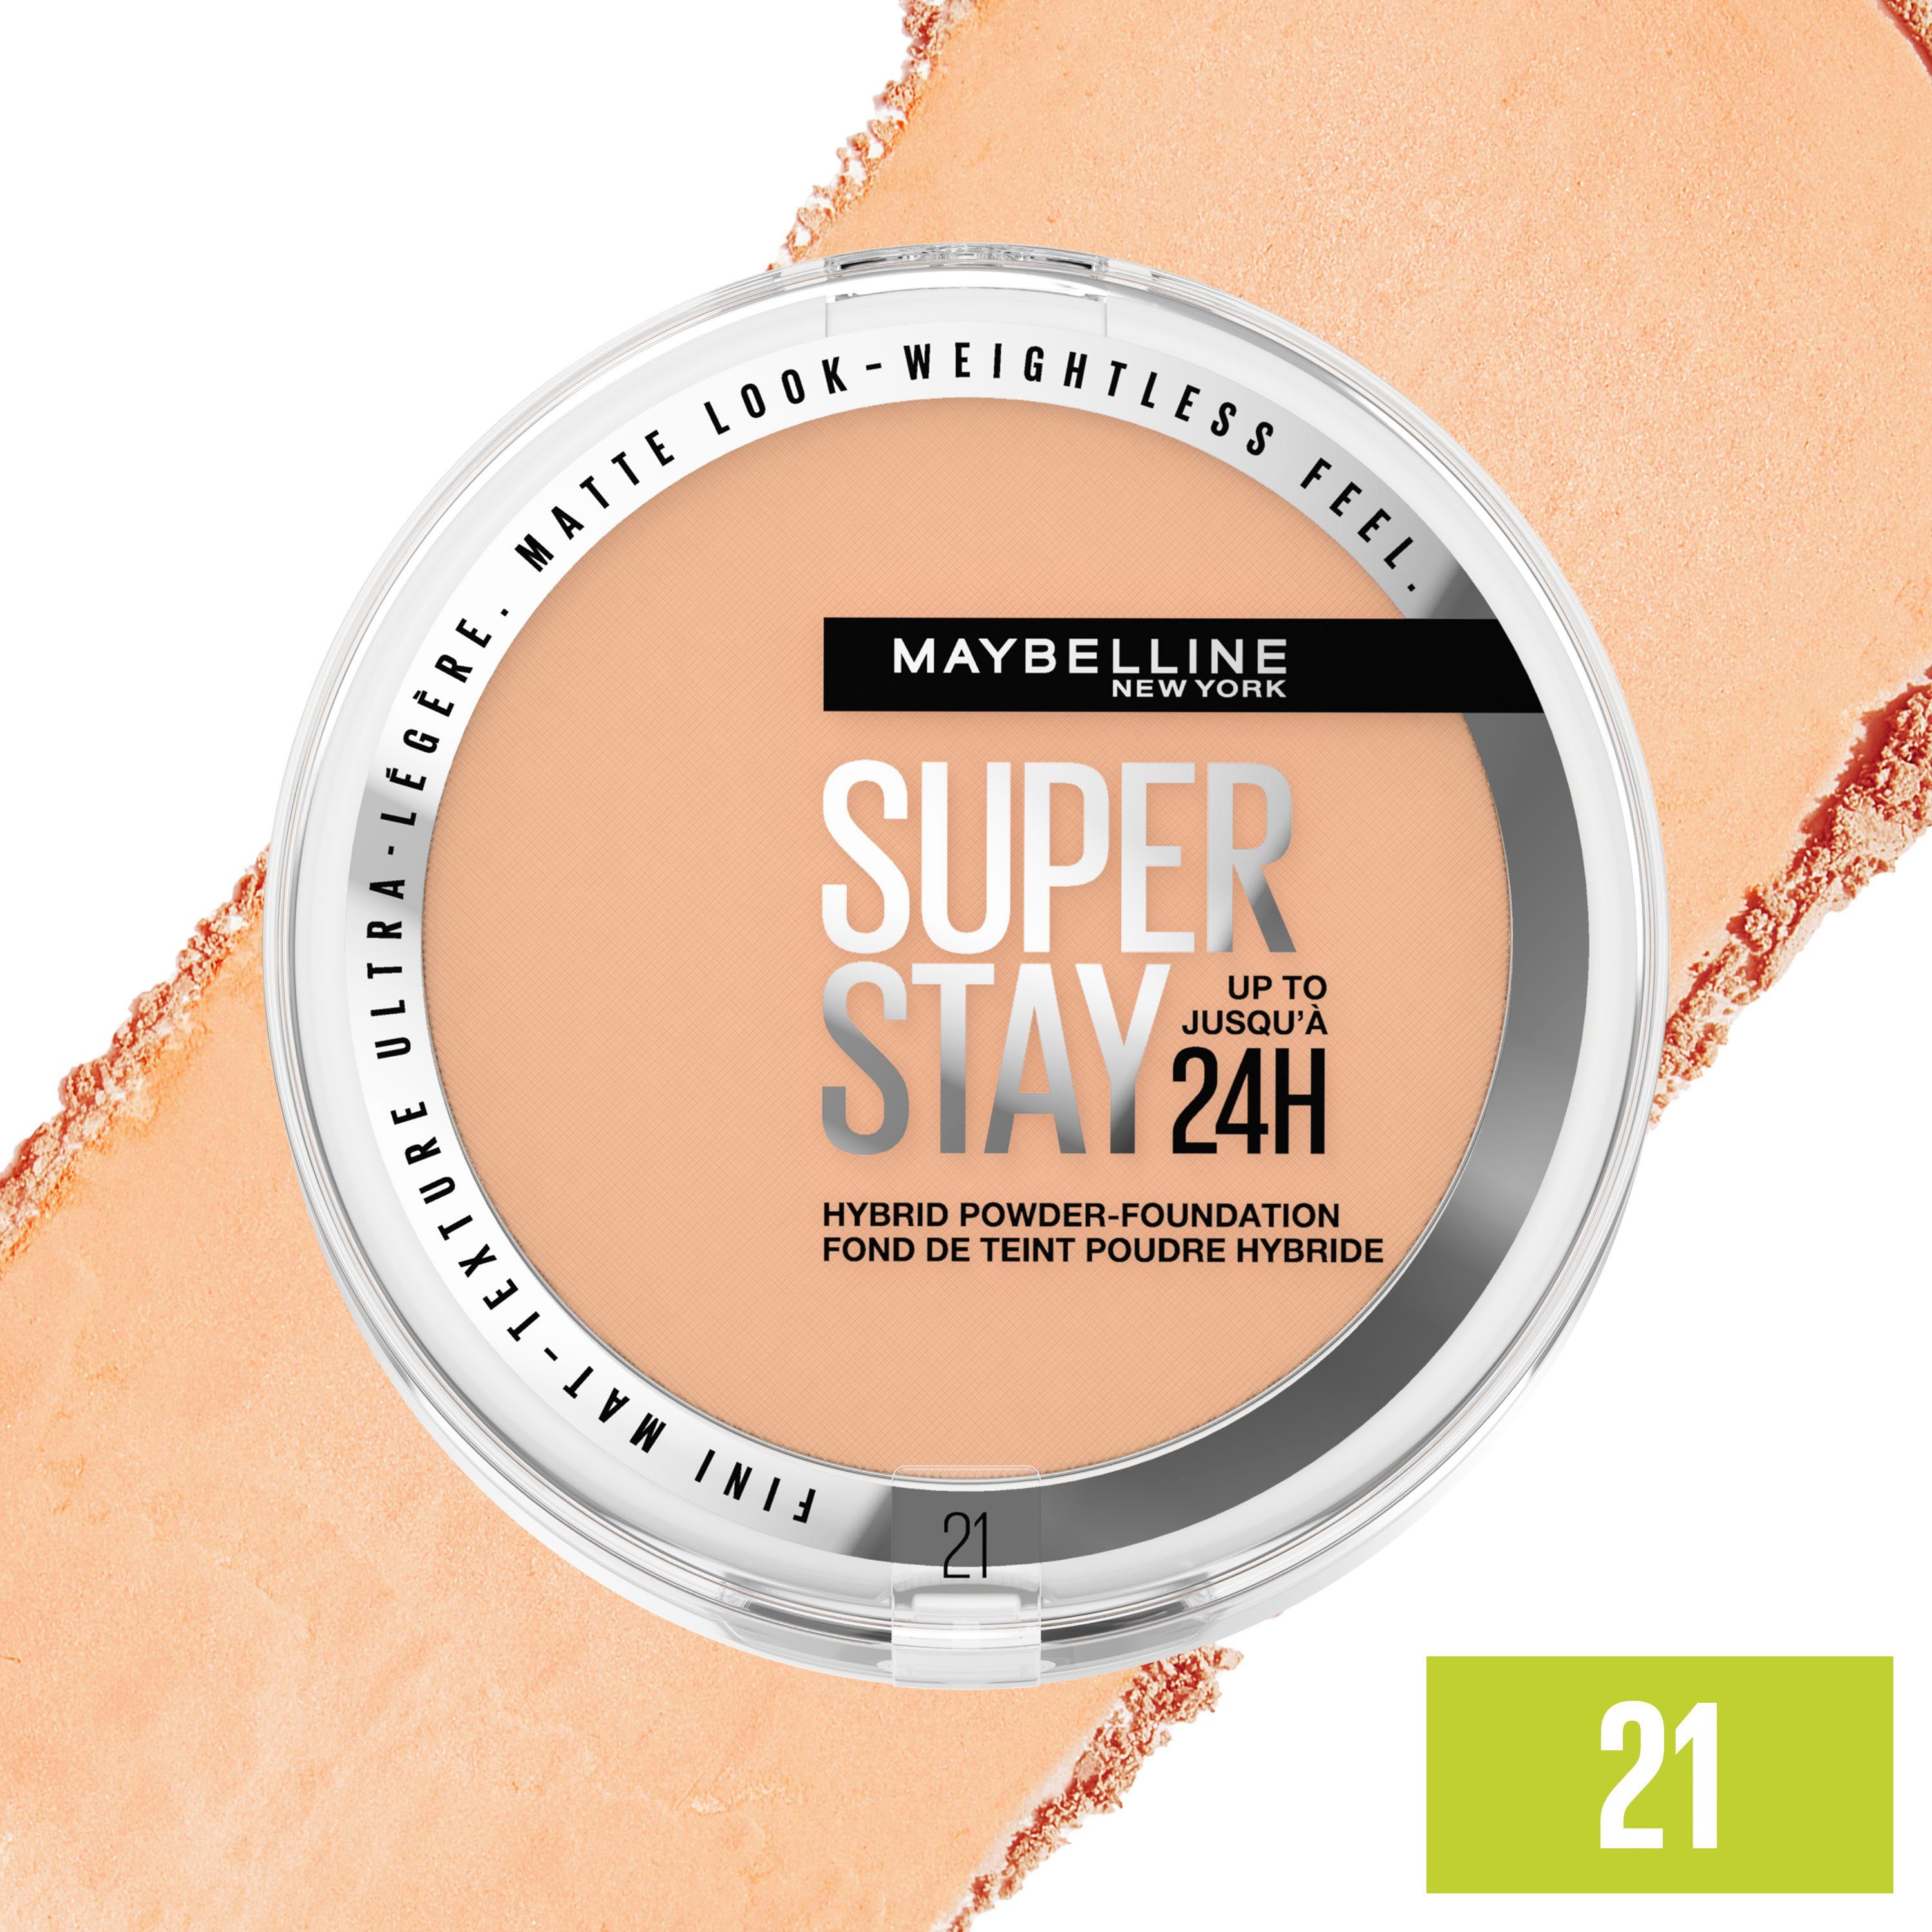 Make-Up YORK Maybelline Puder Hybrides Foundation Super NEW Stay New MAYBELLINE York